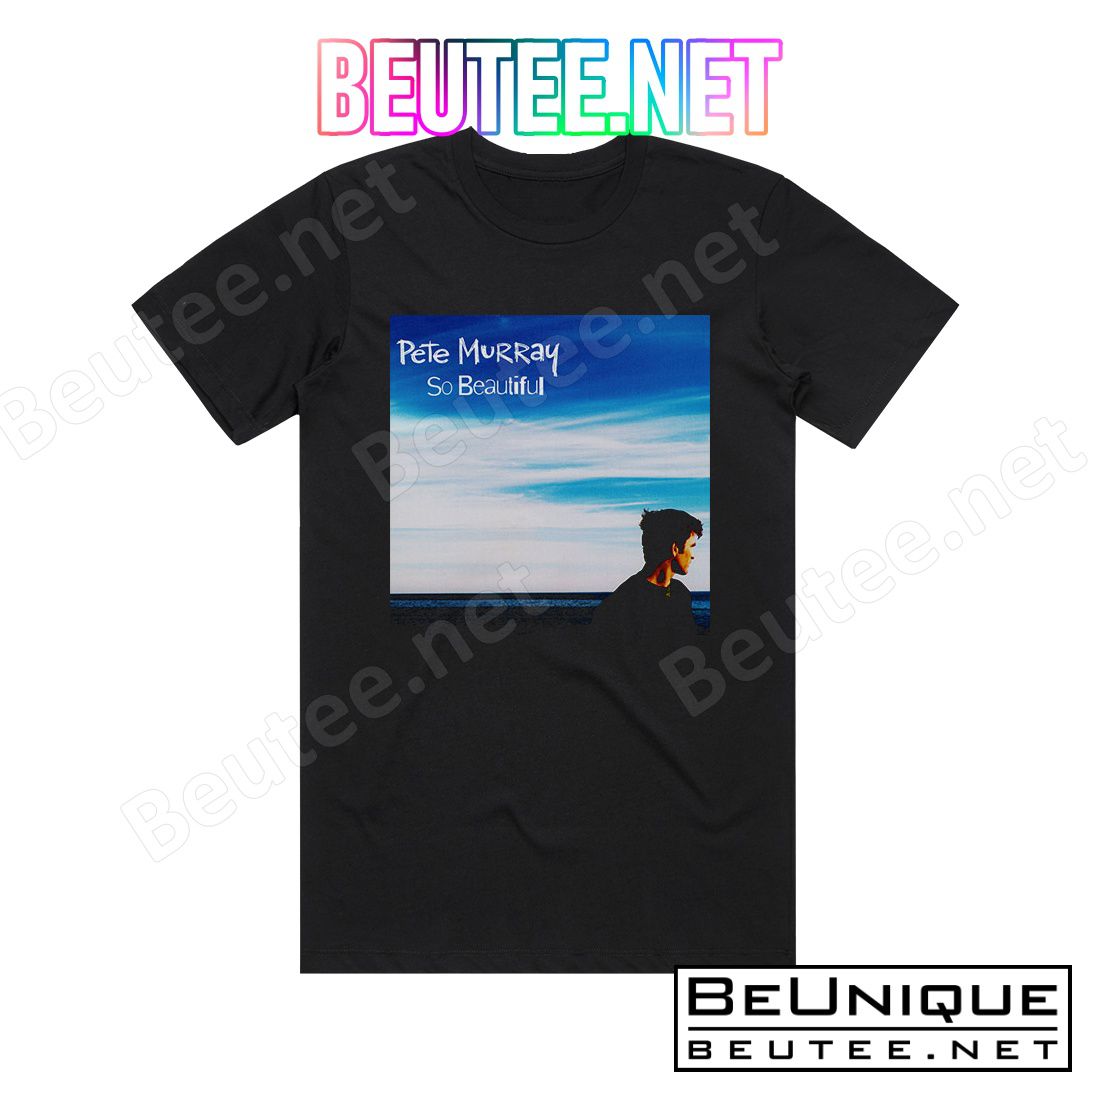 Pete Murray So Beautiful Album Cover T-Shirt